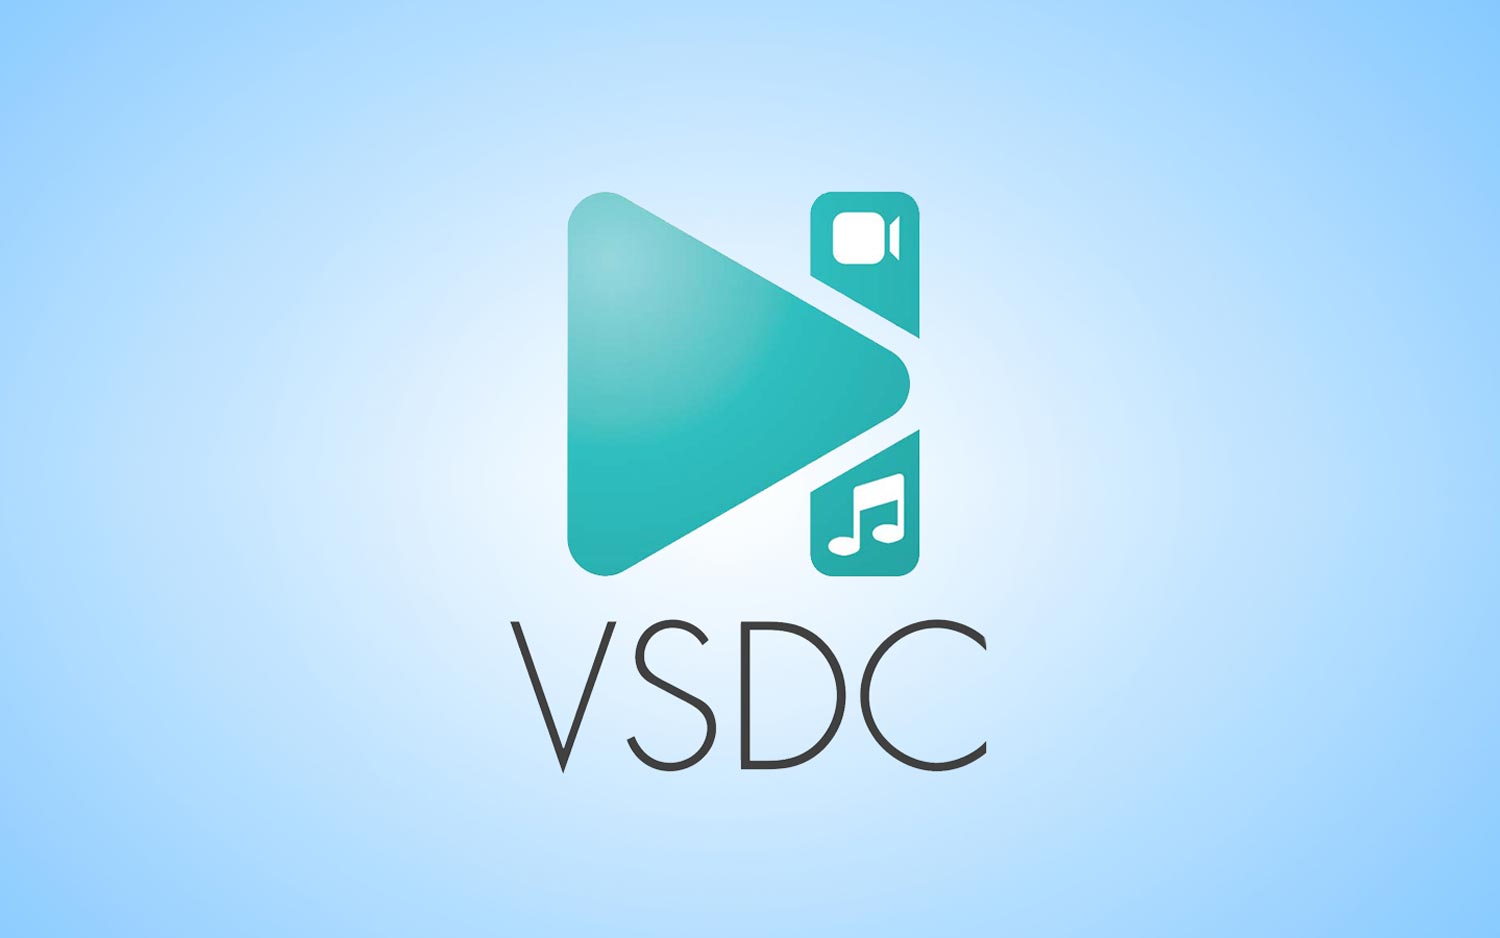 vsdc video editor set clip duration